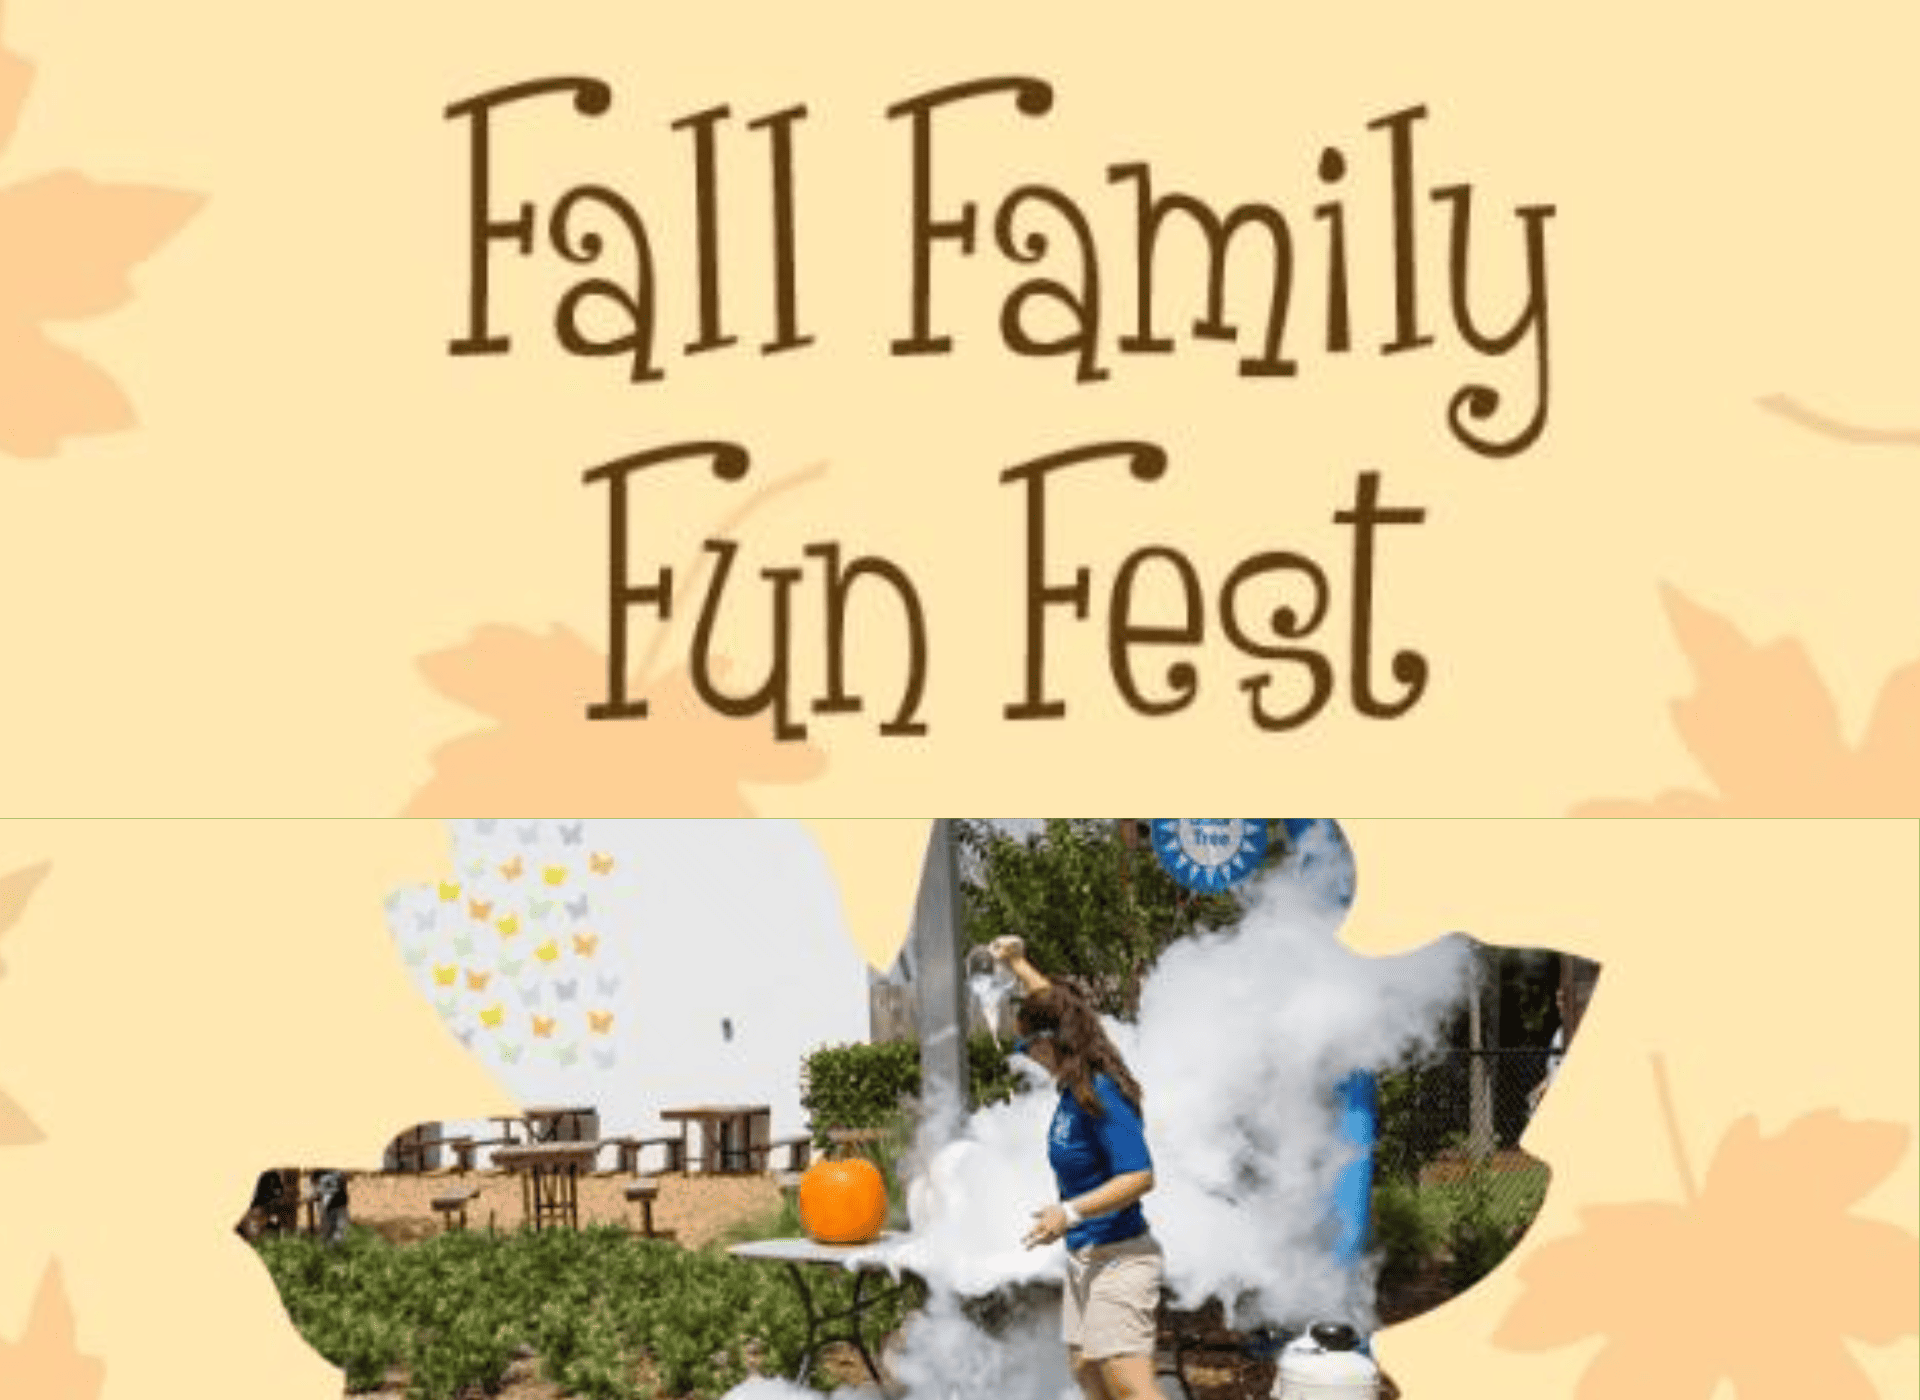 Cox Science Center and Aquarium - Fall Family Fun Fest